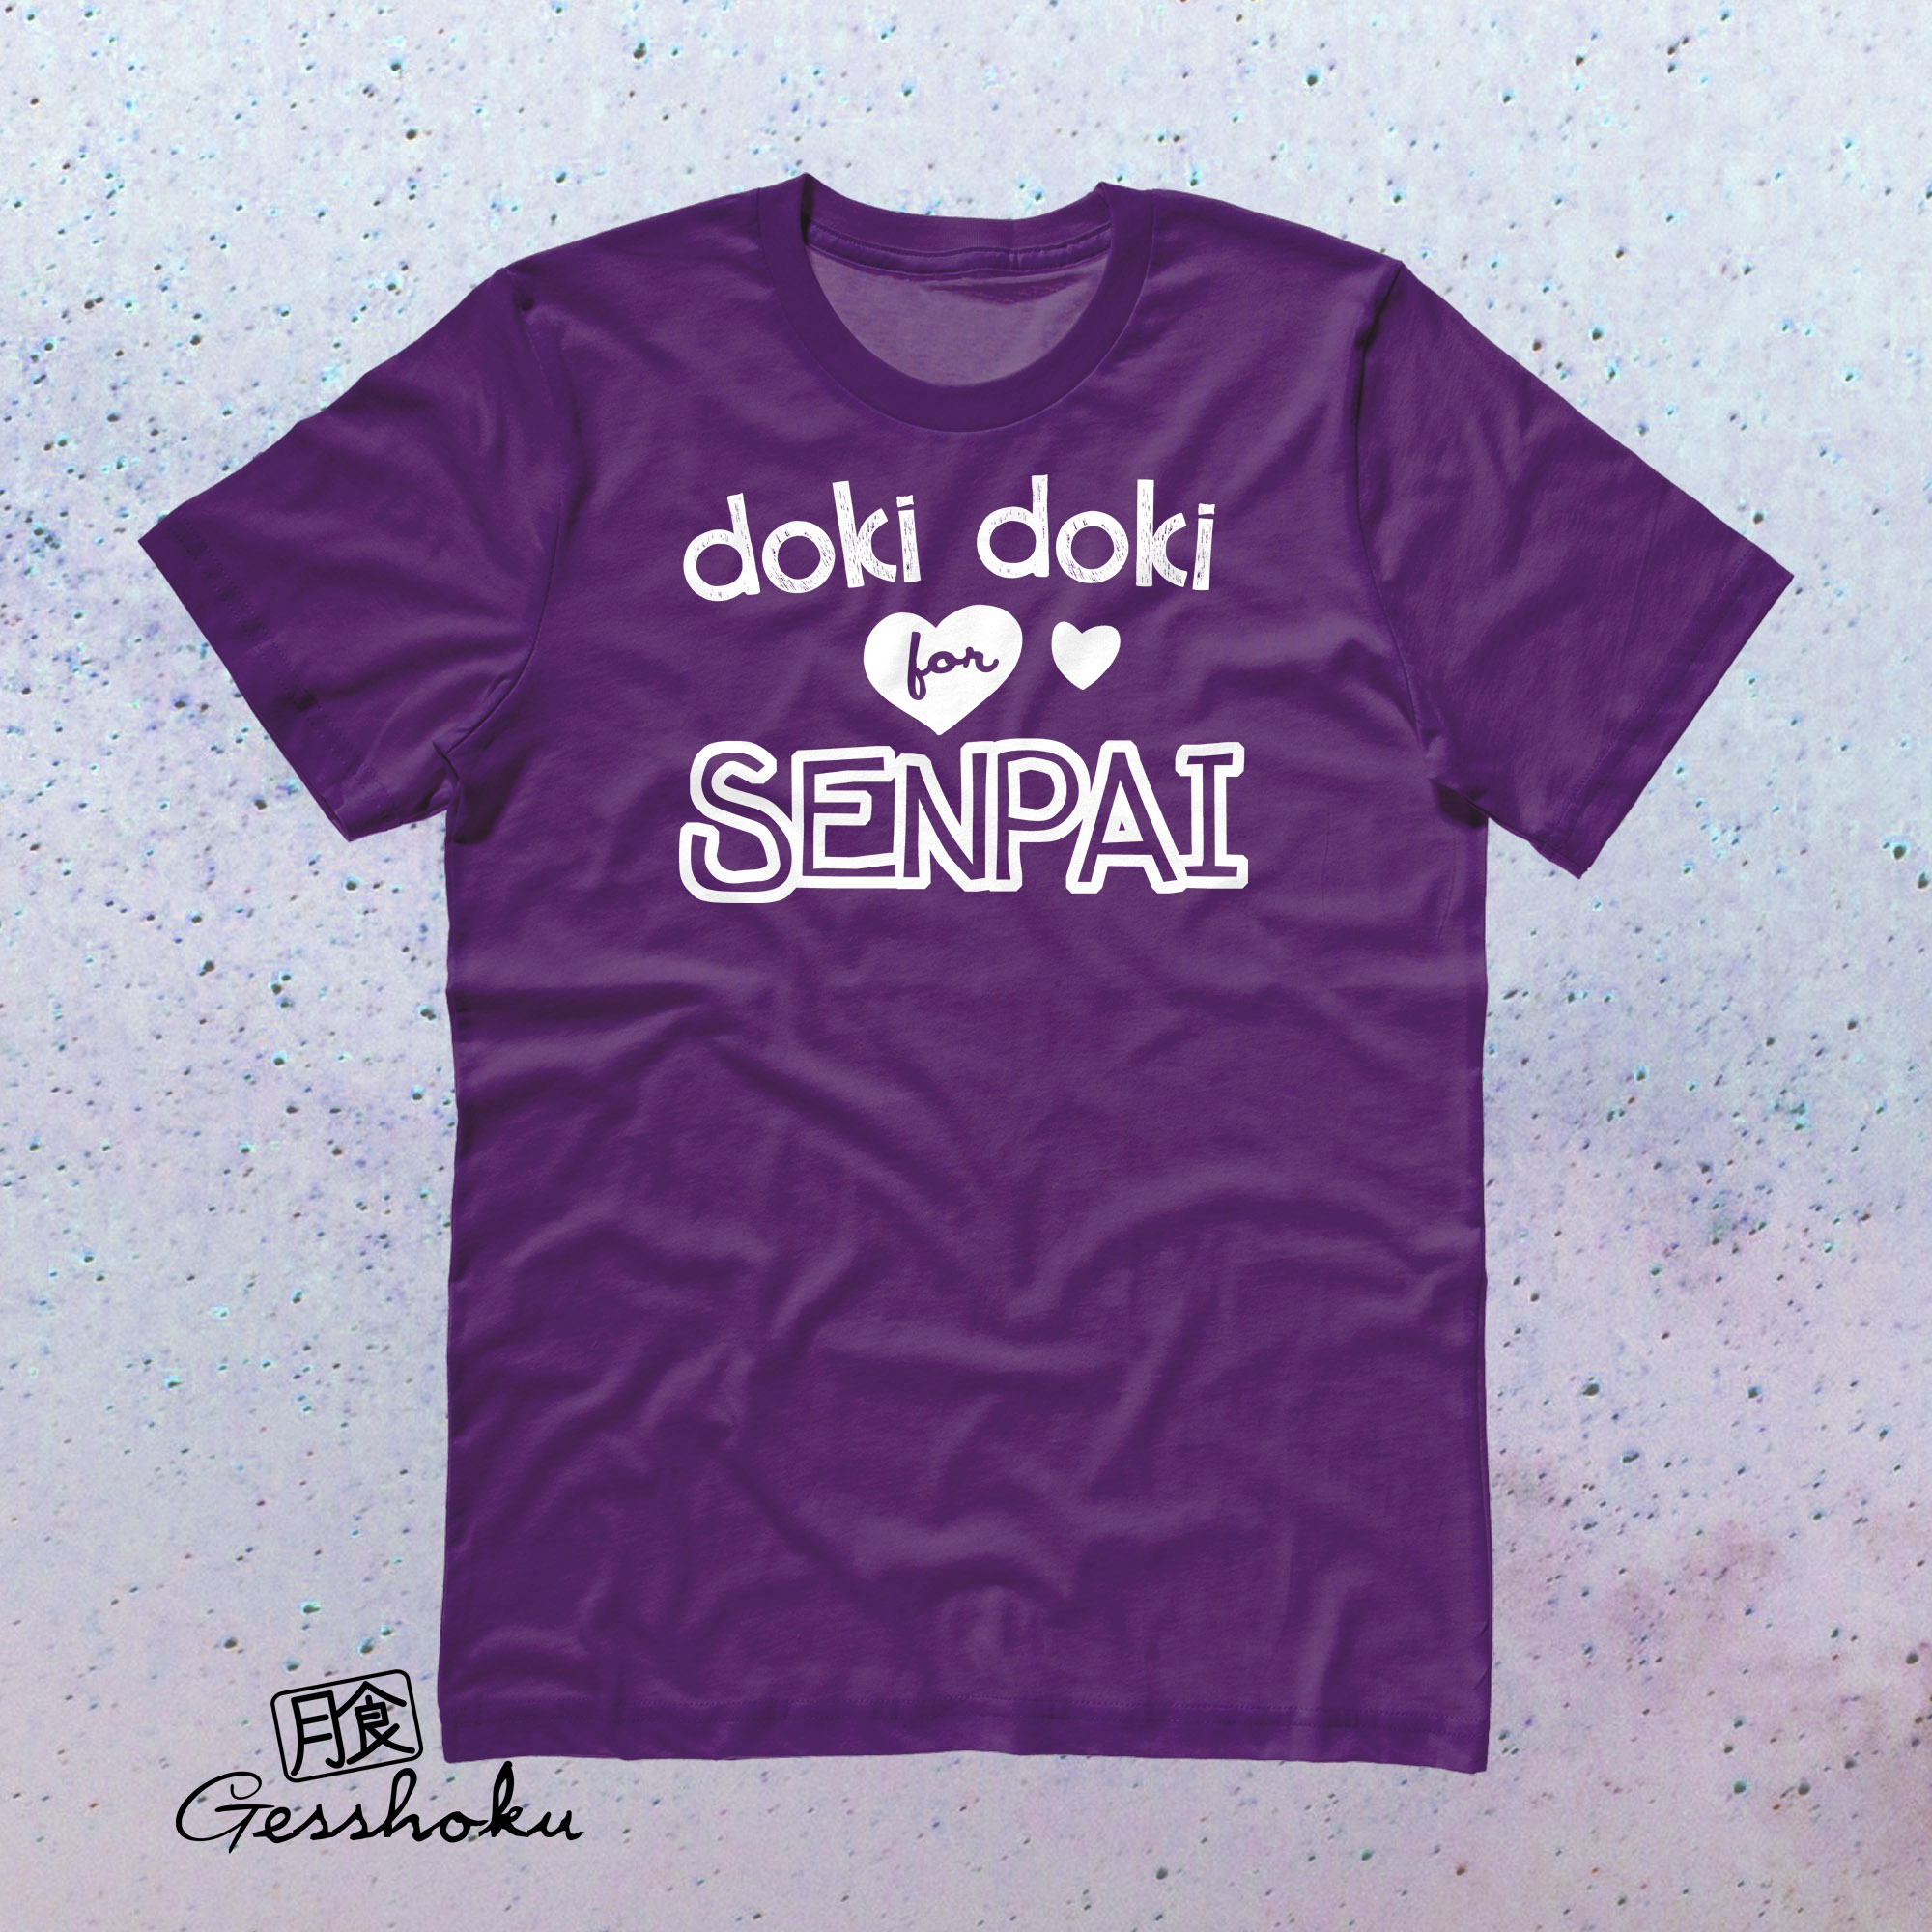 Doki Doki for Senpai T-shirt - Purple